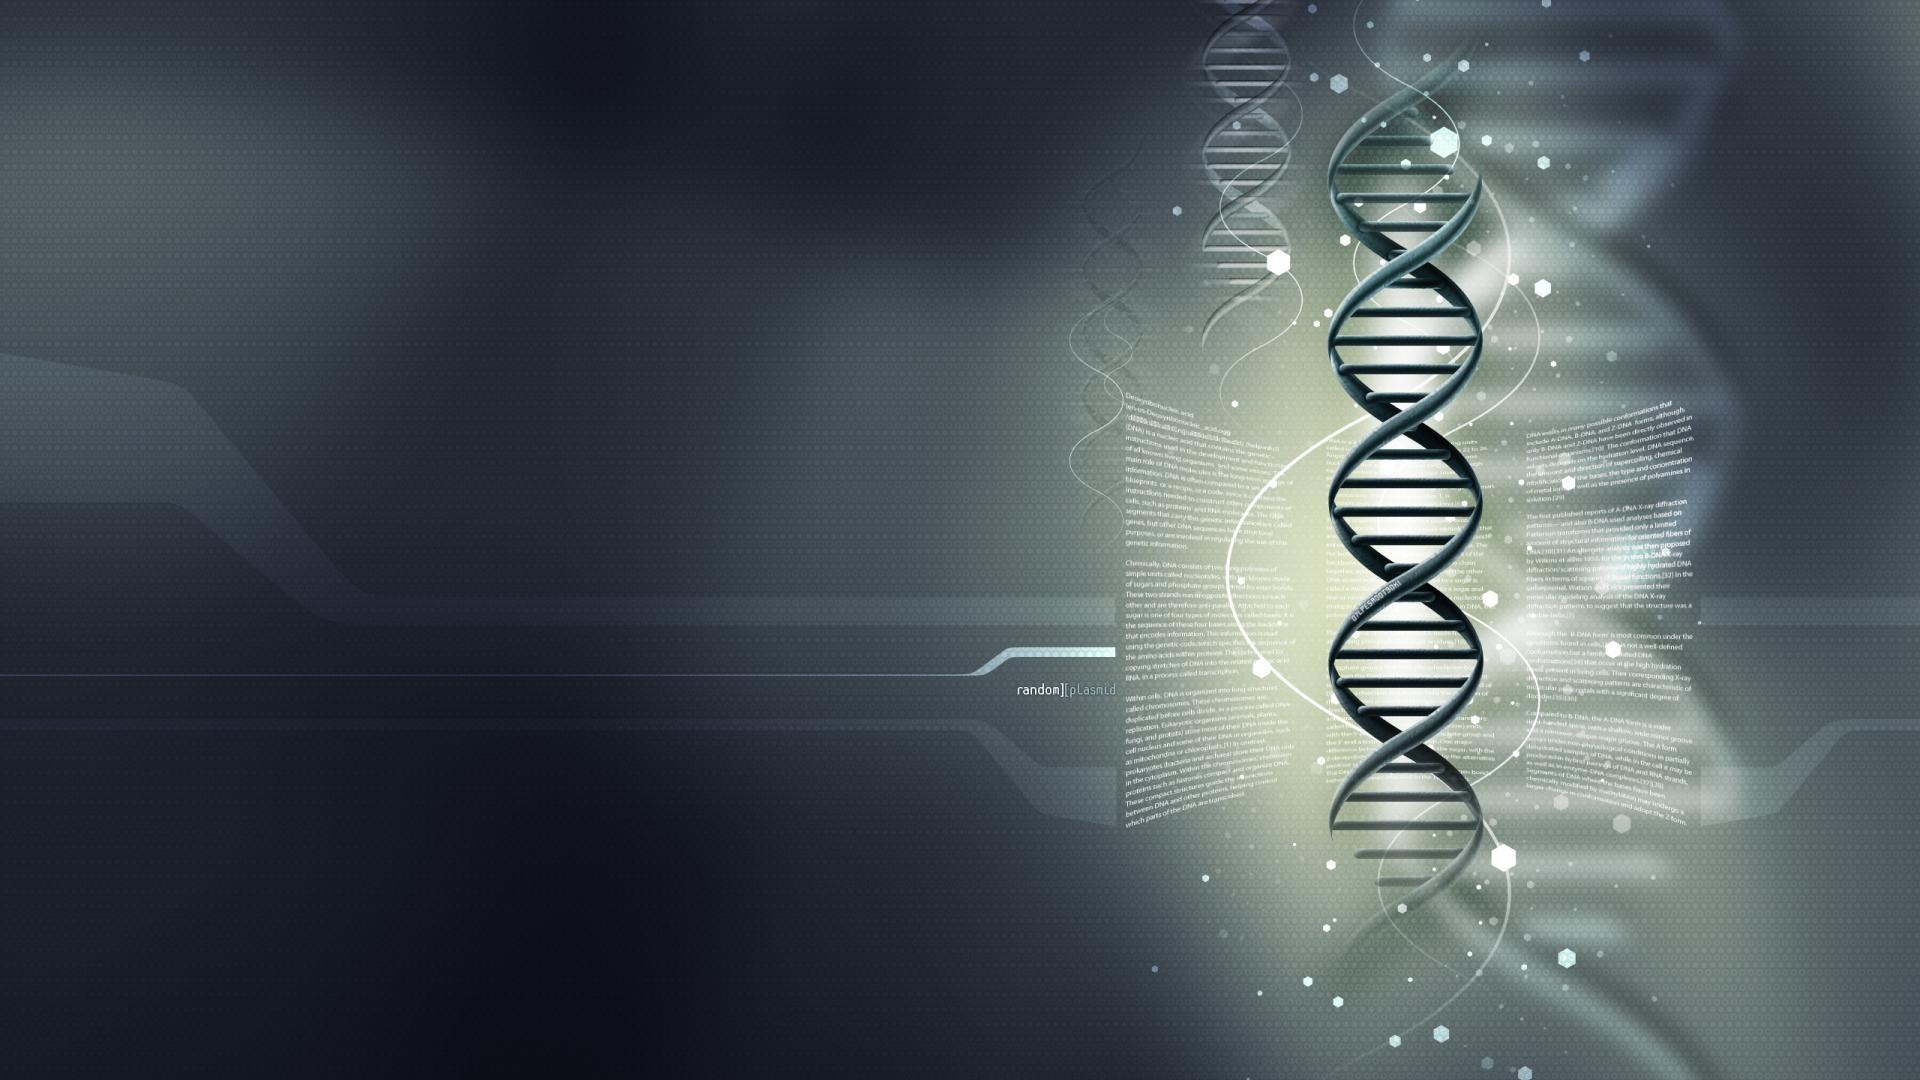 DNA透明基因链设计图__医疗护理_现代科技_设计图库_昵图网nipic.com